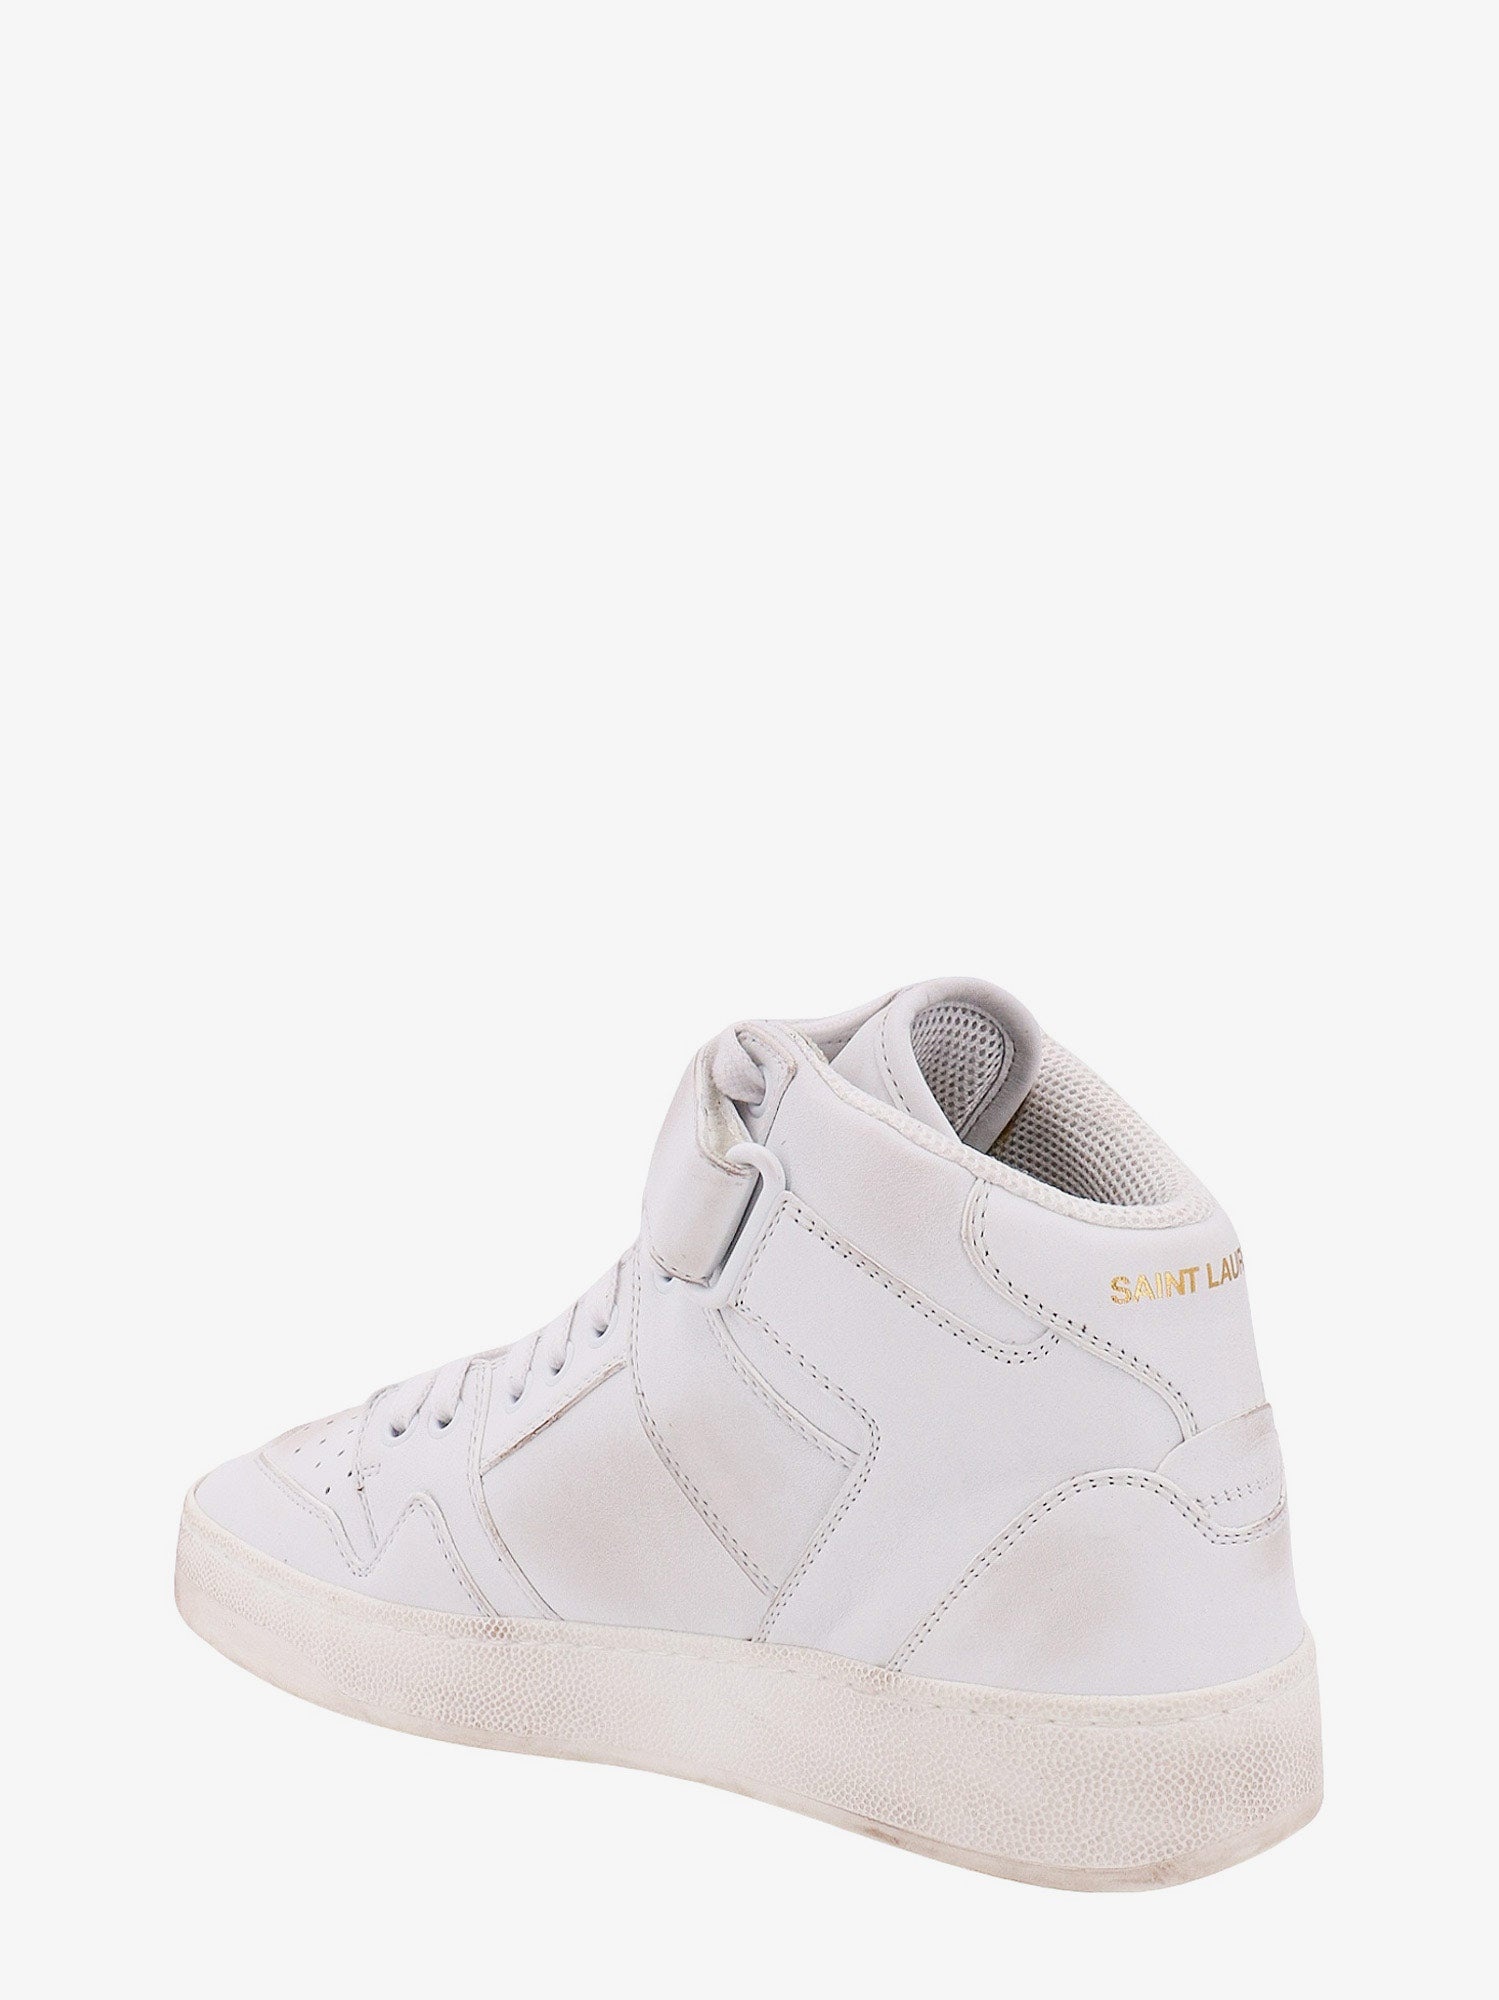 Saint Laurent Man Lax Man White Sneakers - 3